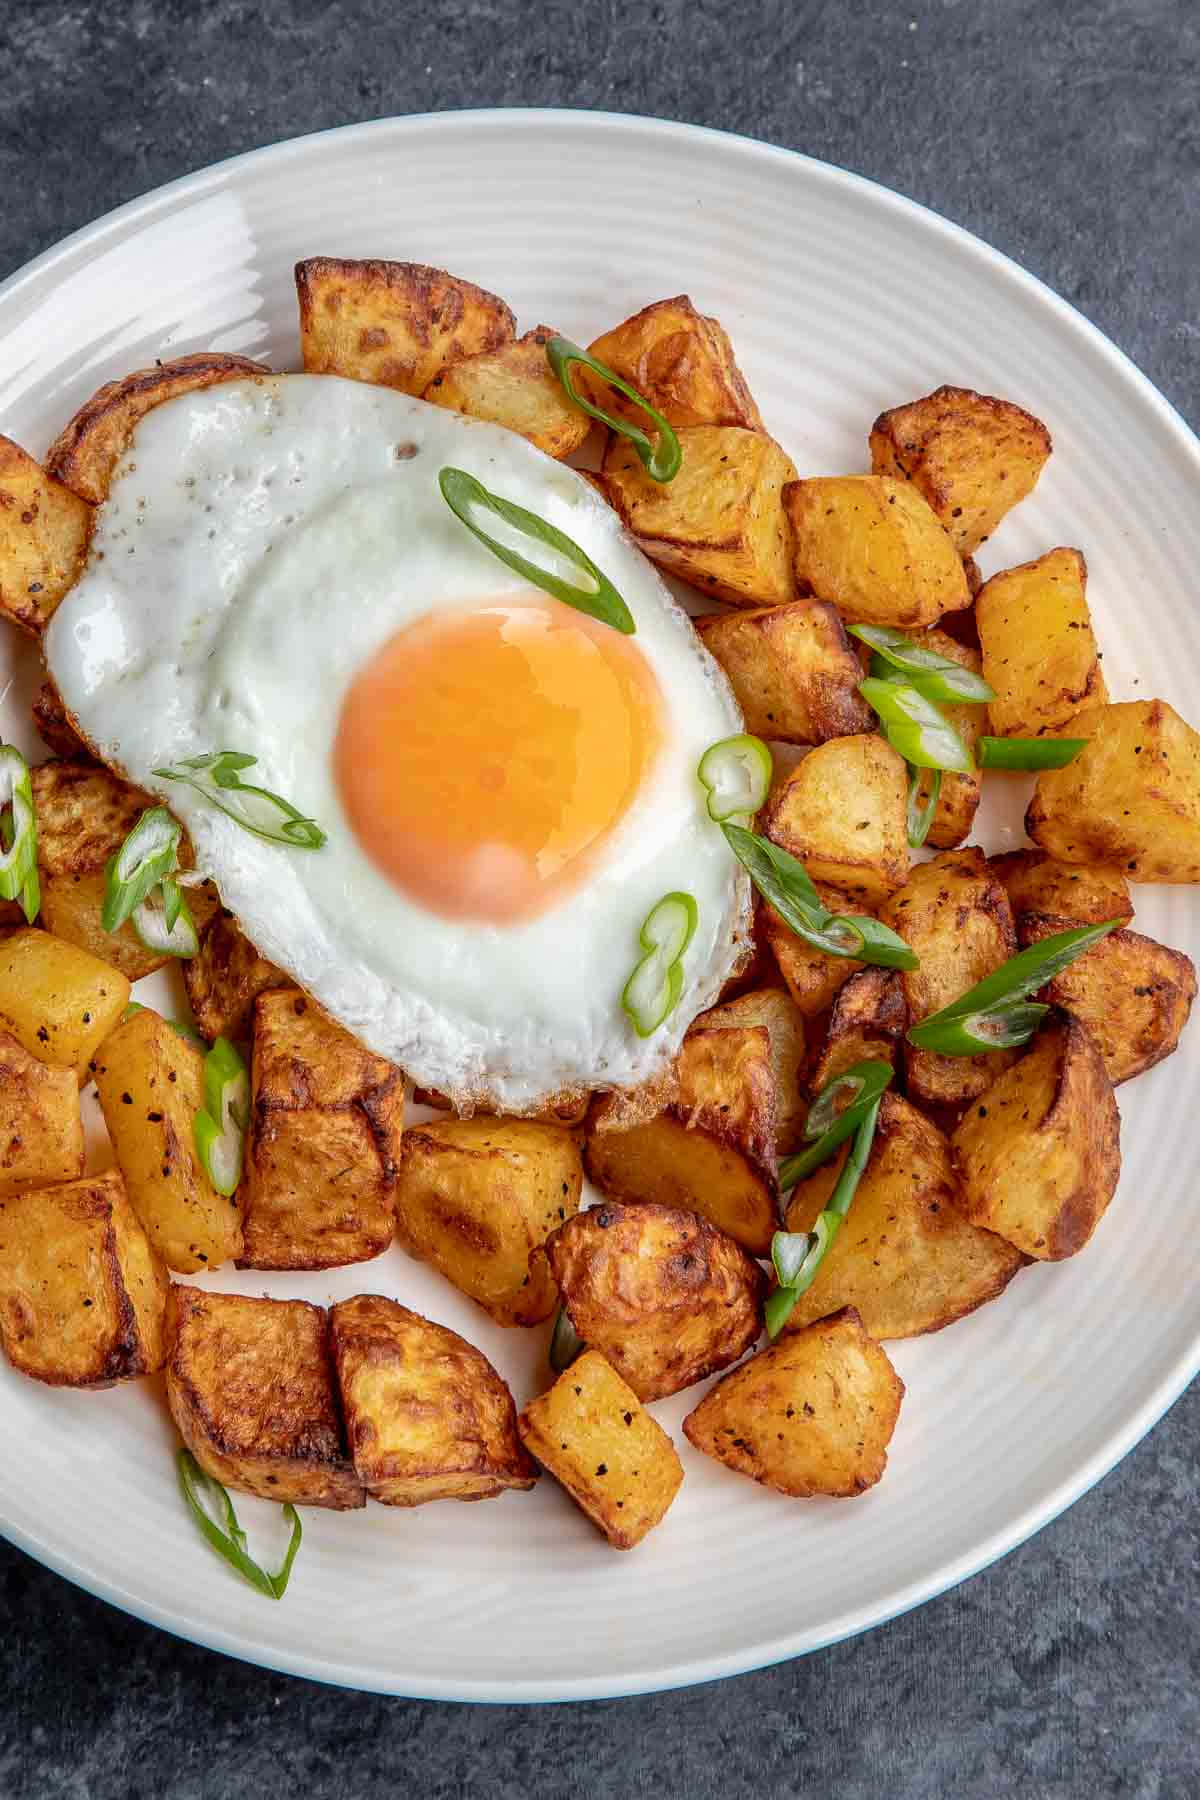 Fried Potatoes With A Fried Egg On A Plate